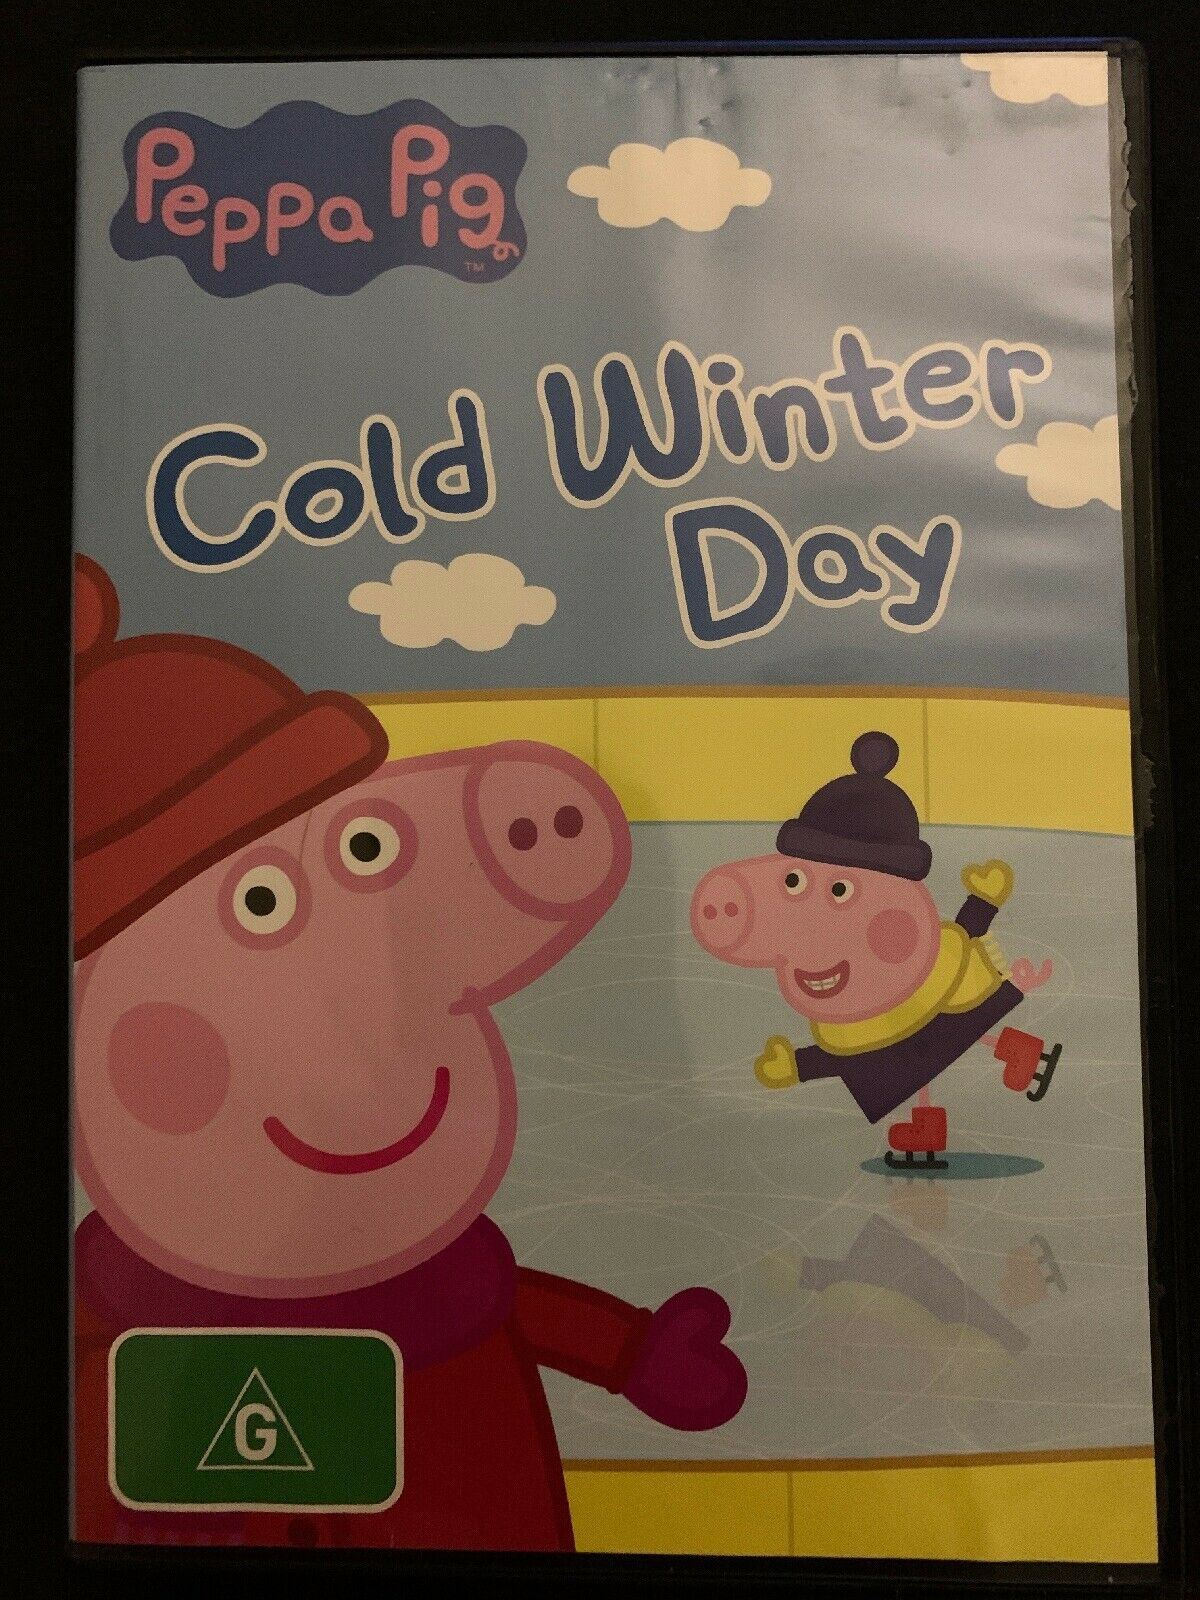 Peppa Pig - Cold Winter Day (DVD, 2014)